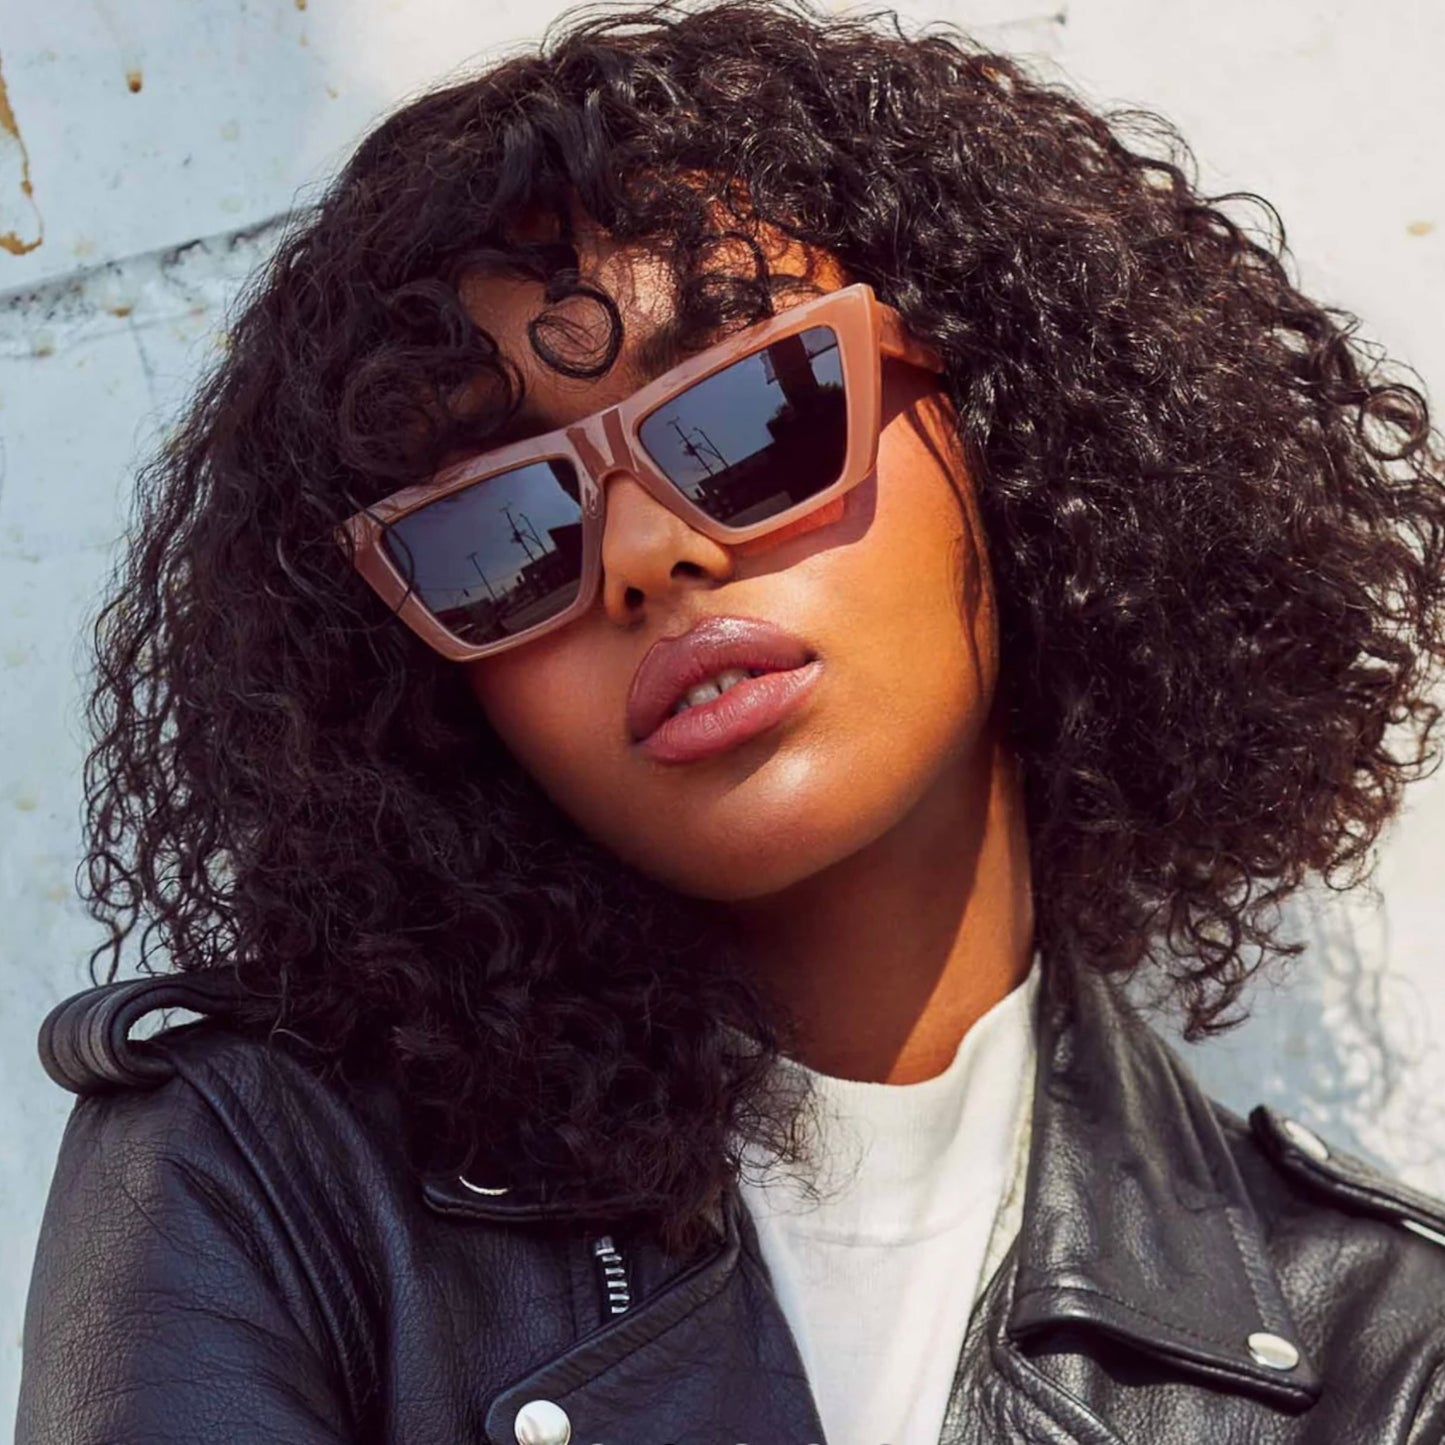 Melrose Sunglasses: Light Taupe + Solid Light Brown